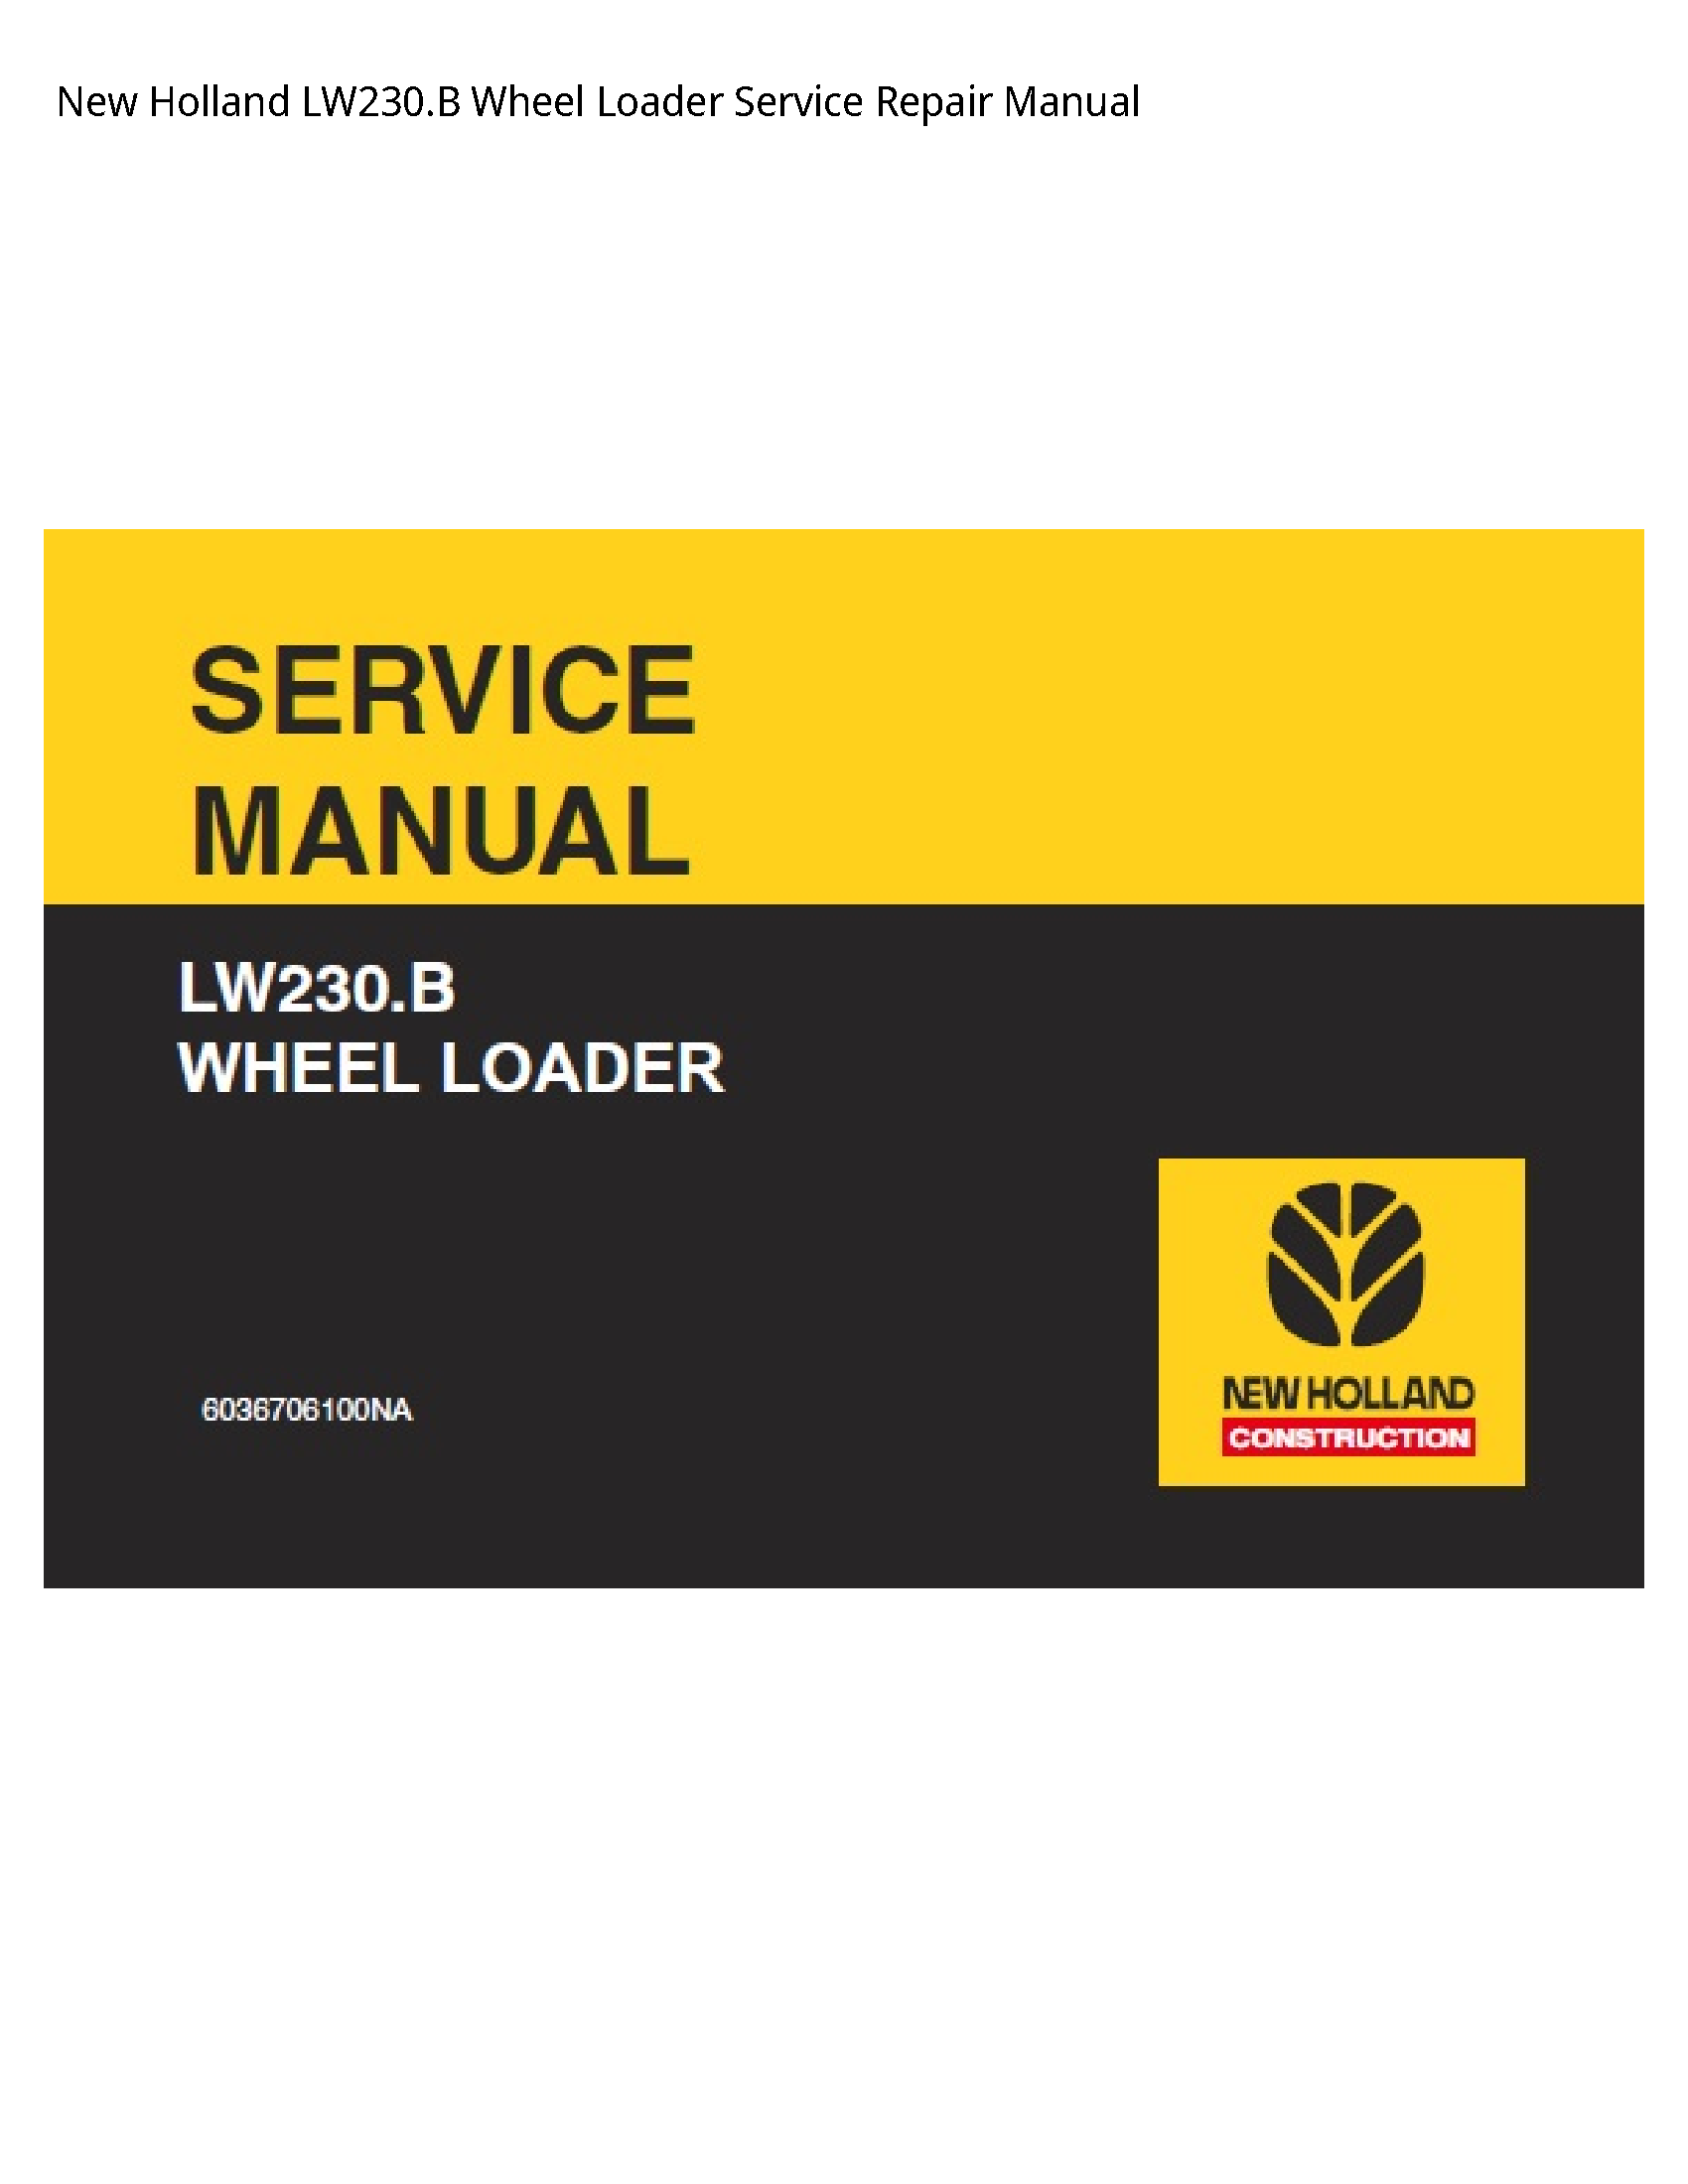 New Holland LW230.B Wheel Loader manual